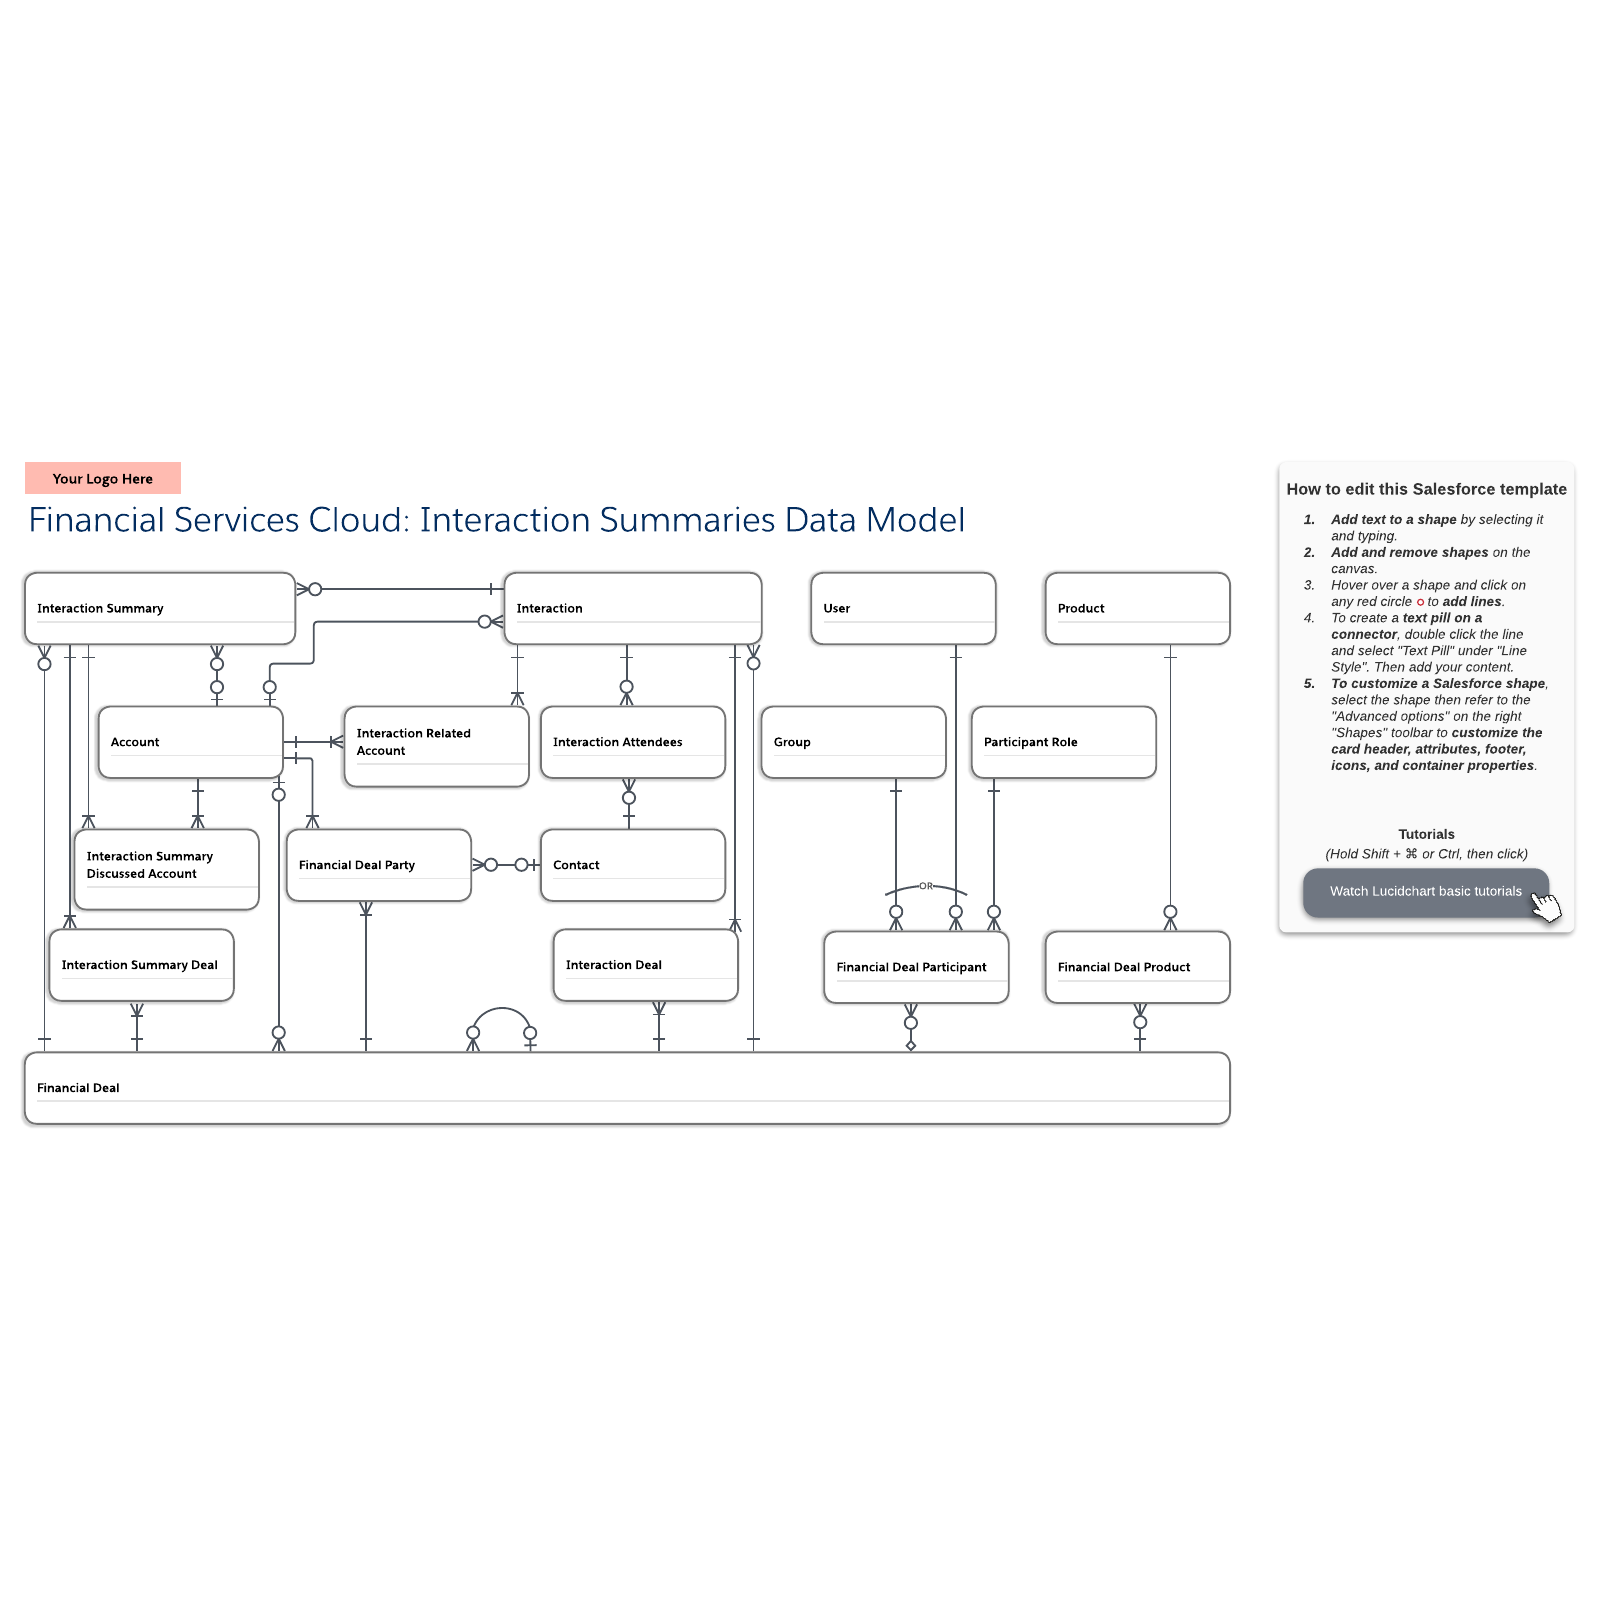 Financial Services Cloud (FSC) Interaction Summaries example